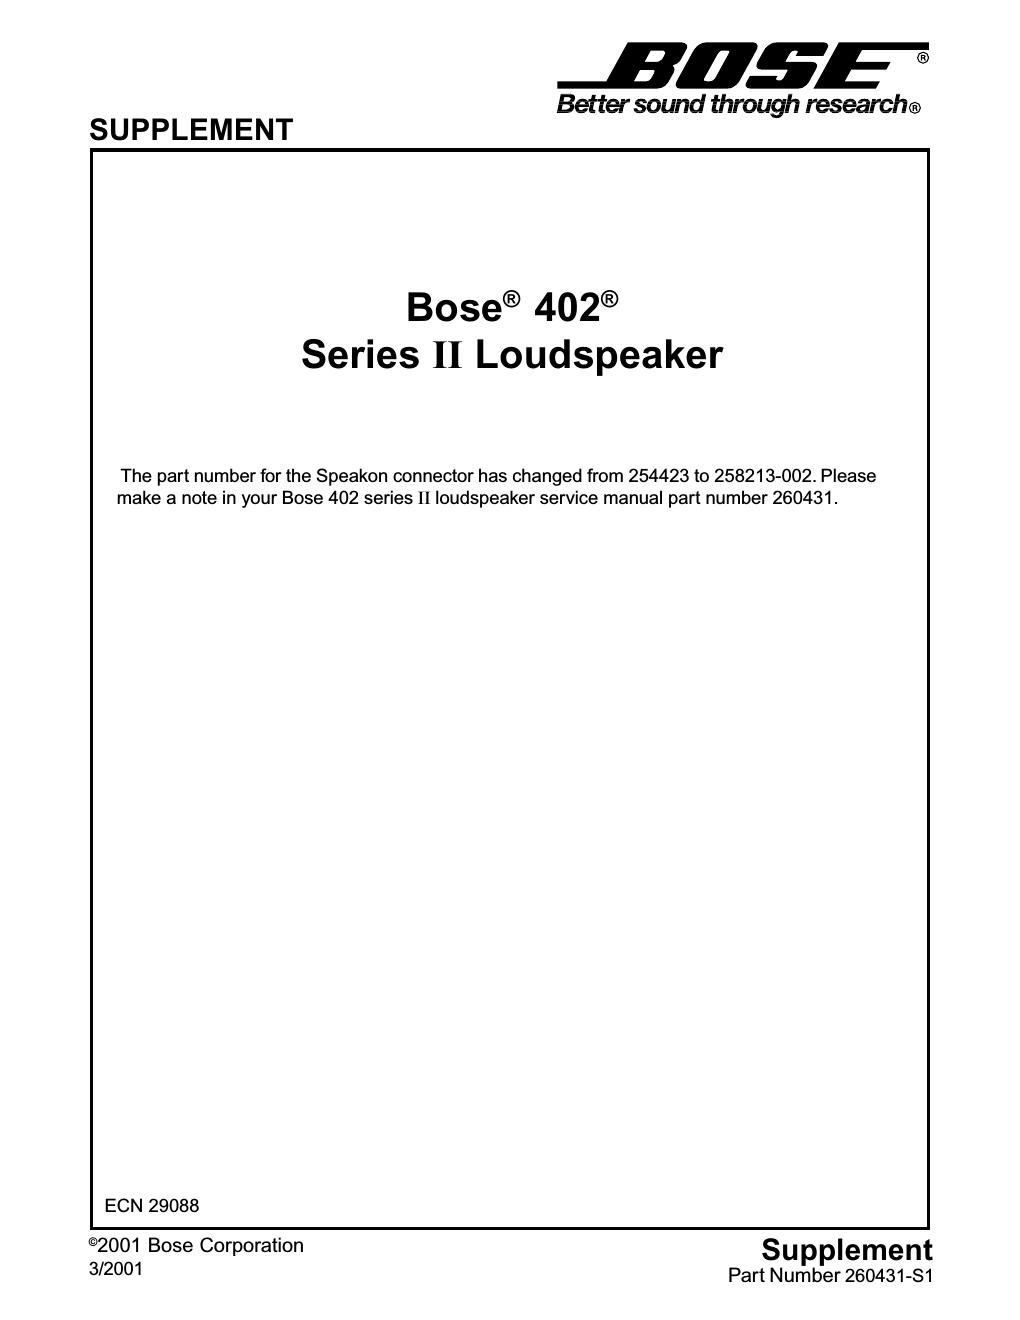 bose 402 series ii speaker supplement 1